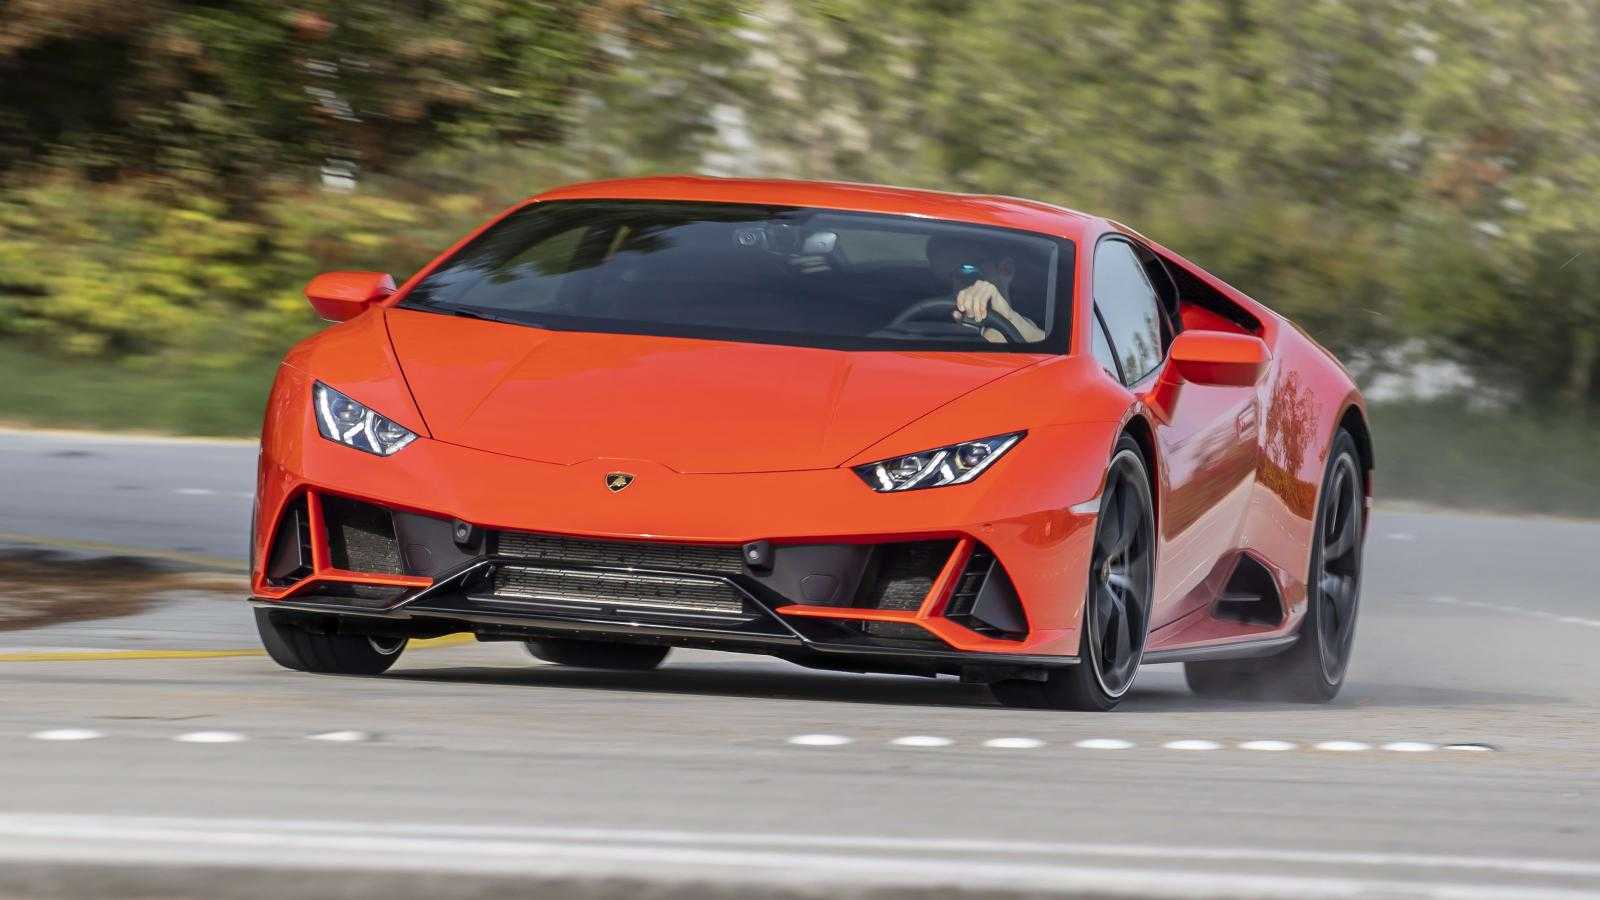 Lamborghini huracan evo 2019-2020 - фото и цена суперкара, характеристики нового ламборгини хуракан эво